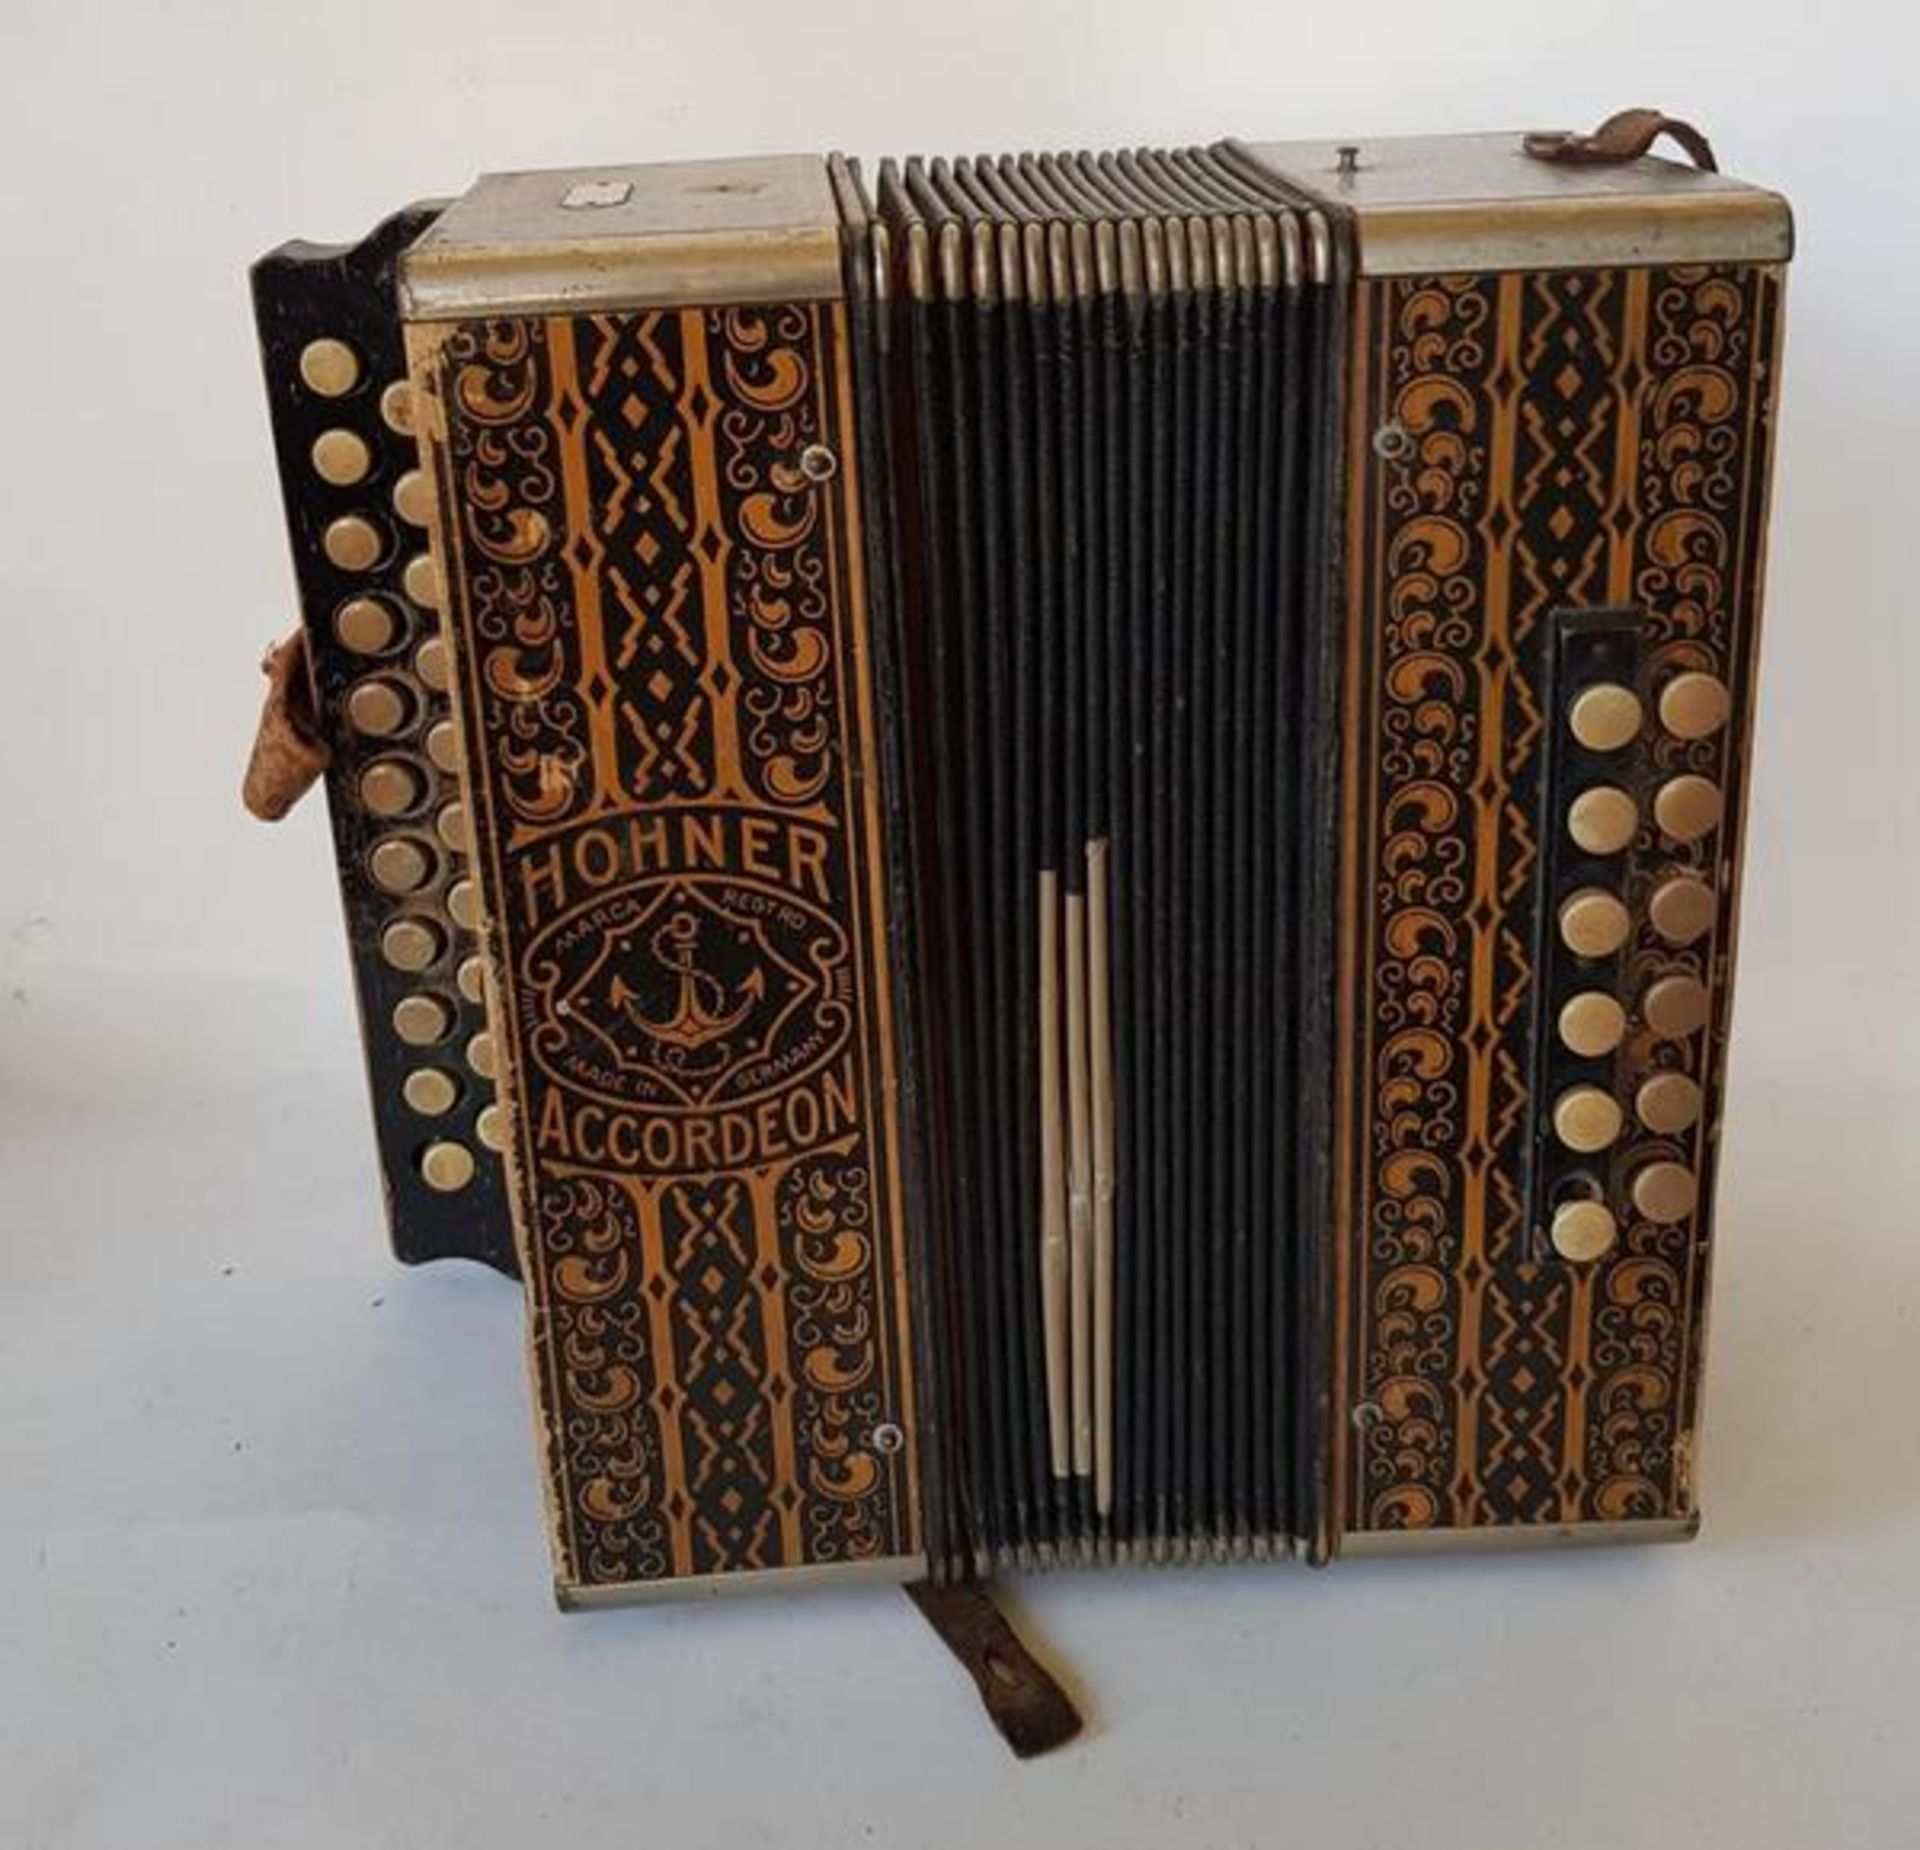 (Muziekinstrumenten) Hohner accordeonHohner accordeon, Marca Registrada, Duitsland, in koffer, circa